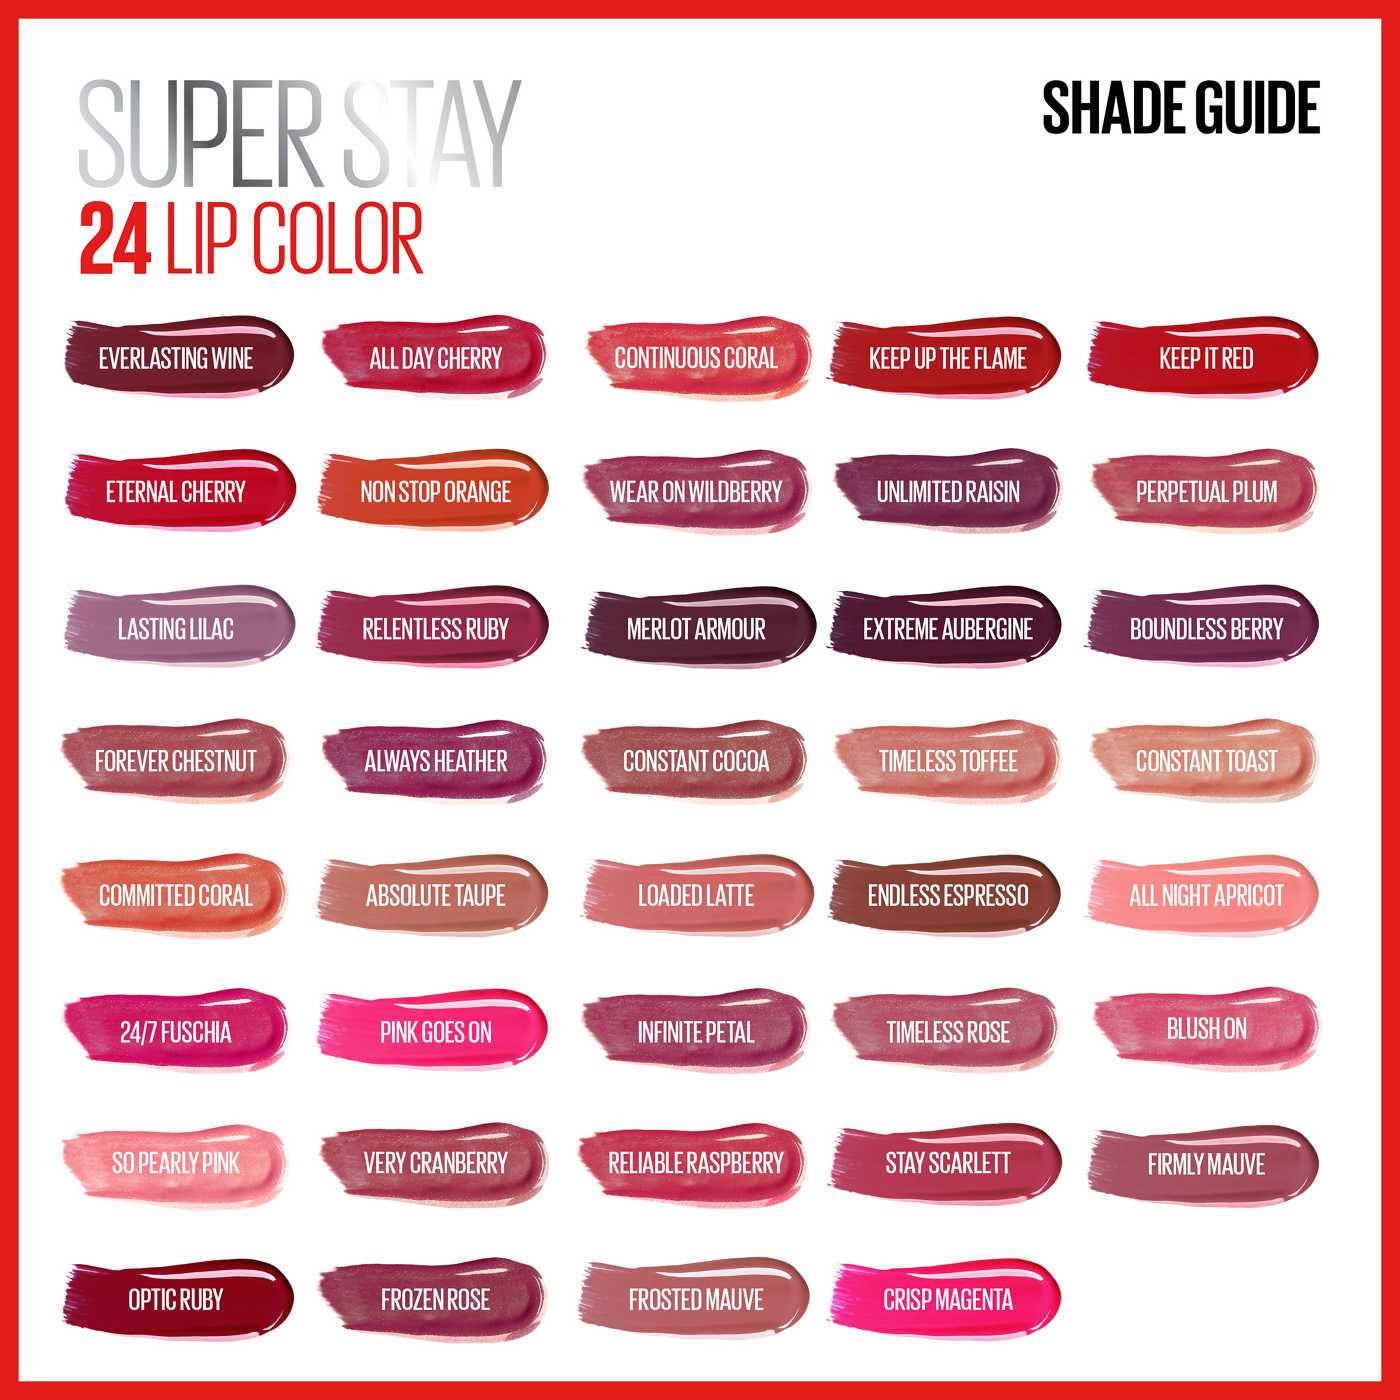 Maybelline Super Stay 24 2-Step Liquid Lipstick - Endless Espresso; image 3 of 5